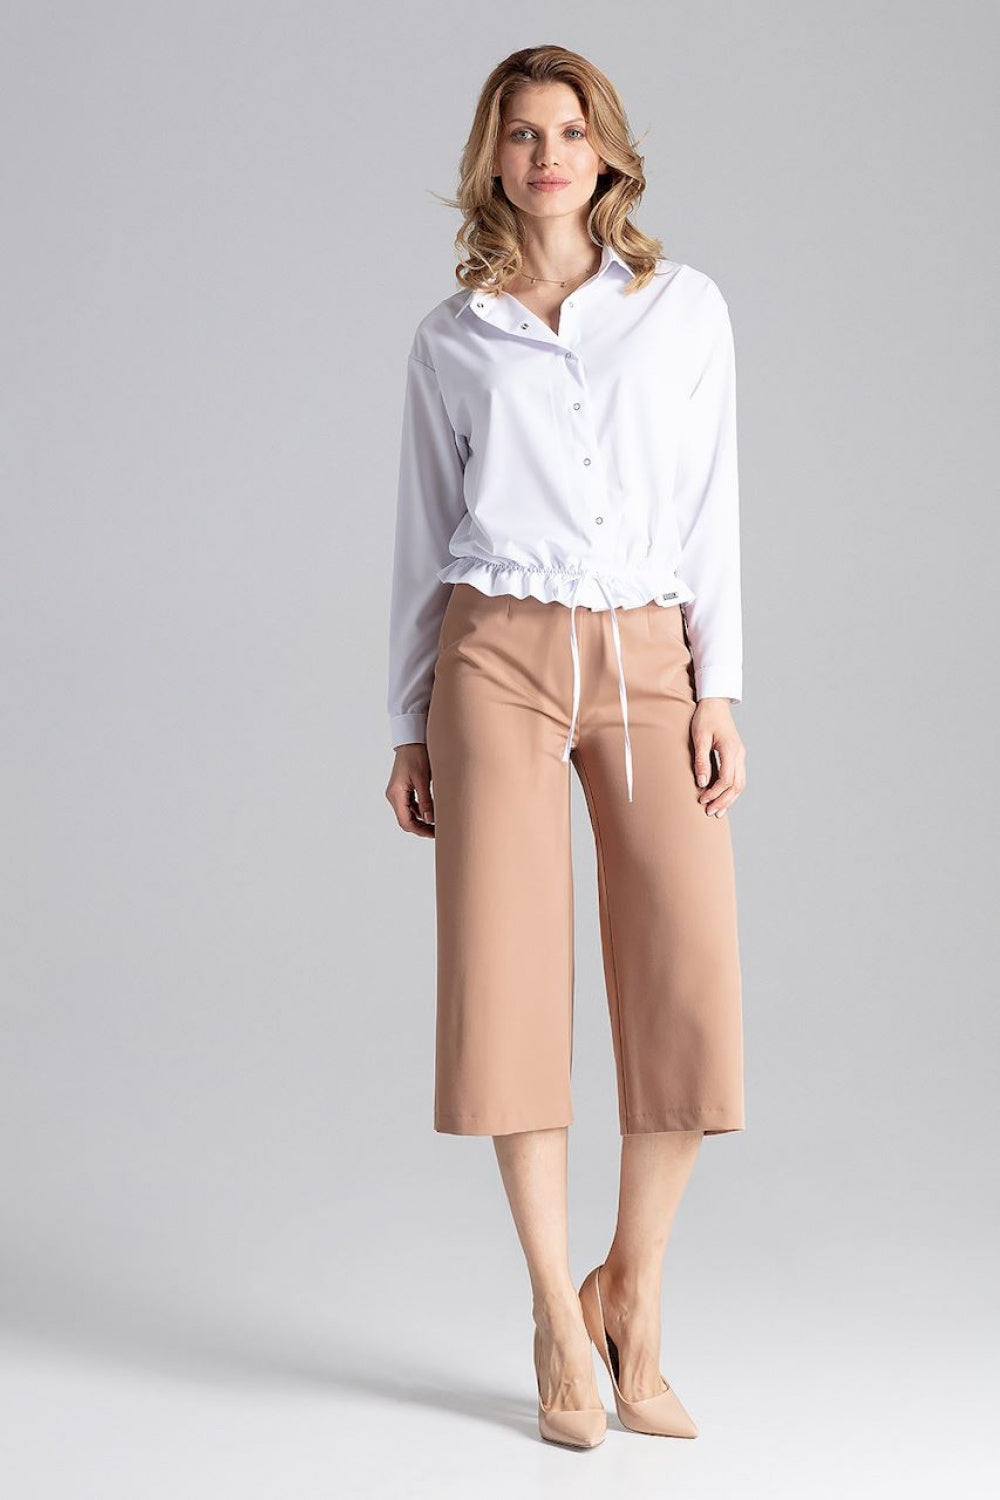 Women trousers model 129787 Elsy Style Pants, Trousers, Shorts